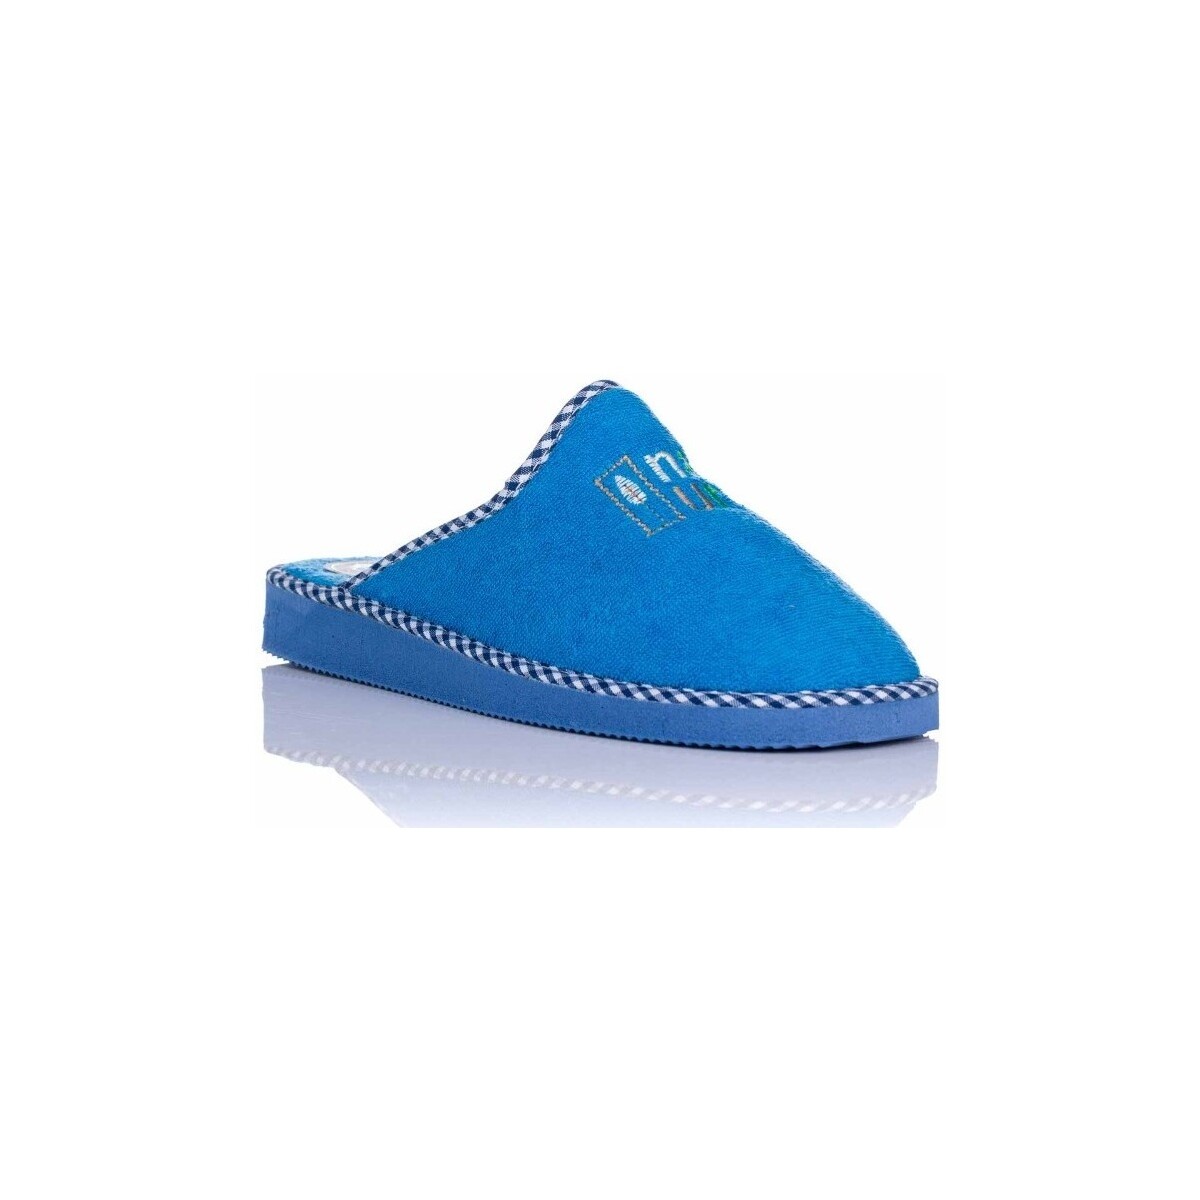 Sapatos Mulher Chinelos Ruiz Y Gallego 2602 RIZO Azul